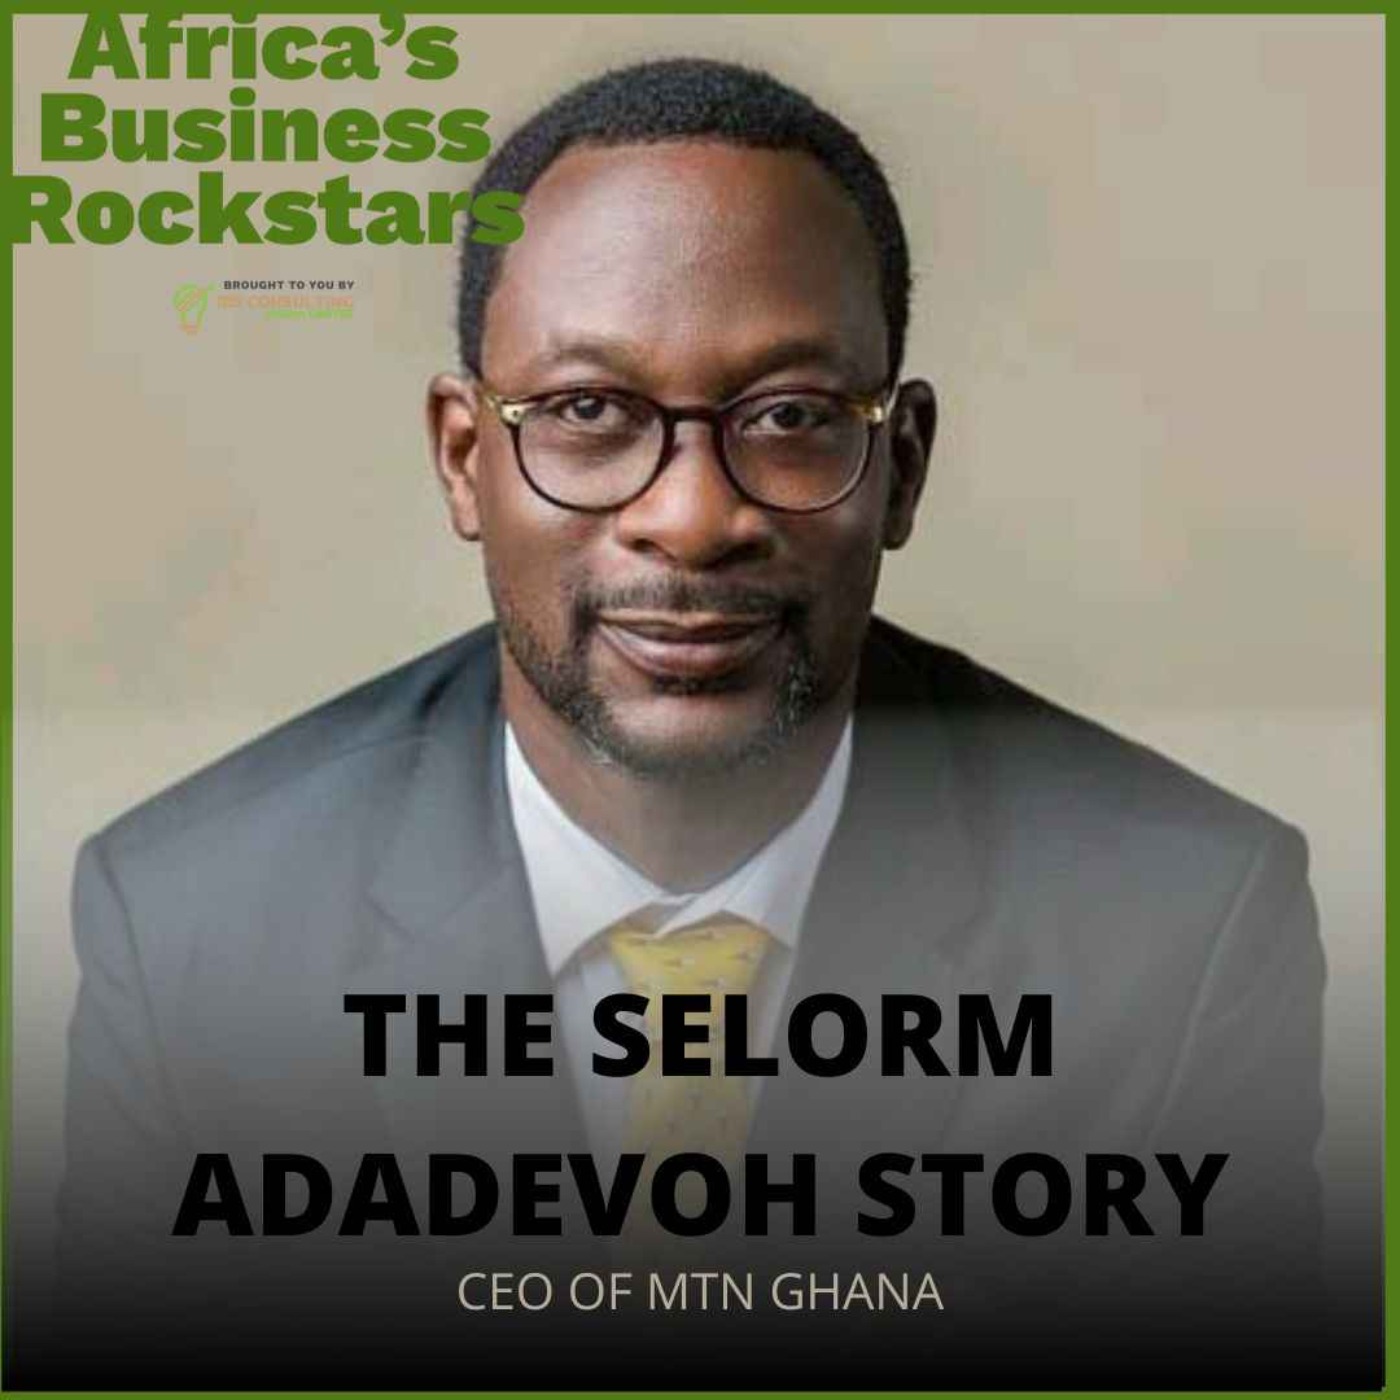 THE SELORM ADADEVOH STORY | Africa's Business Rockstars on Acast